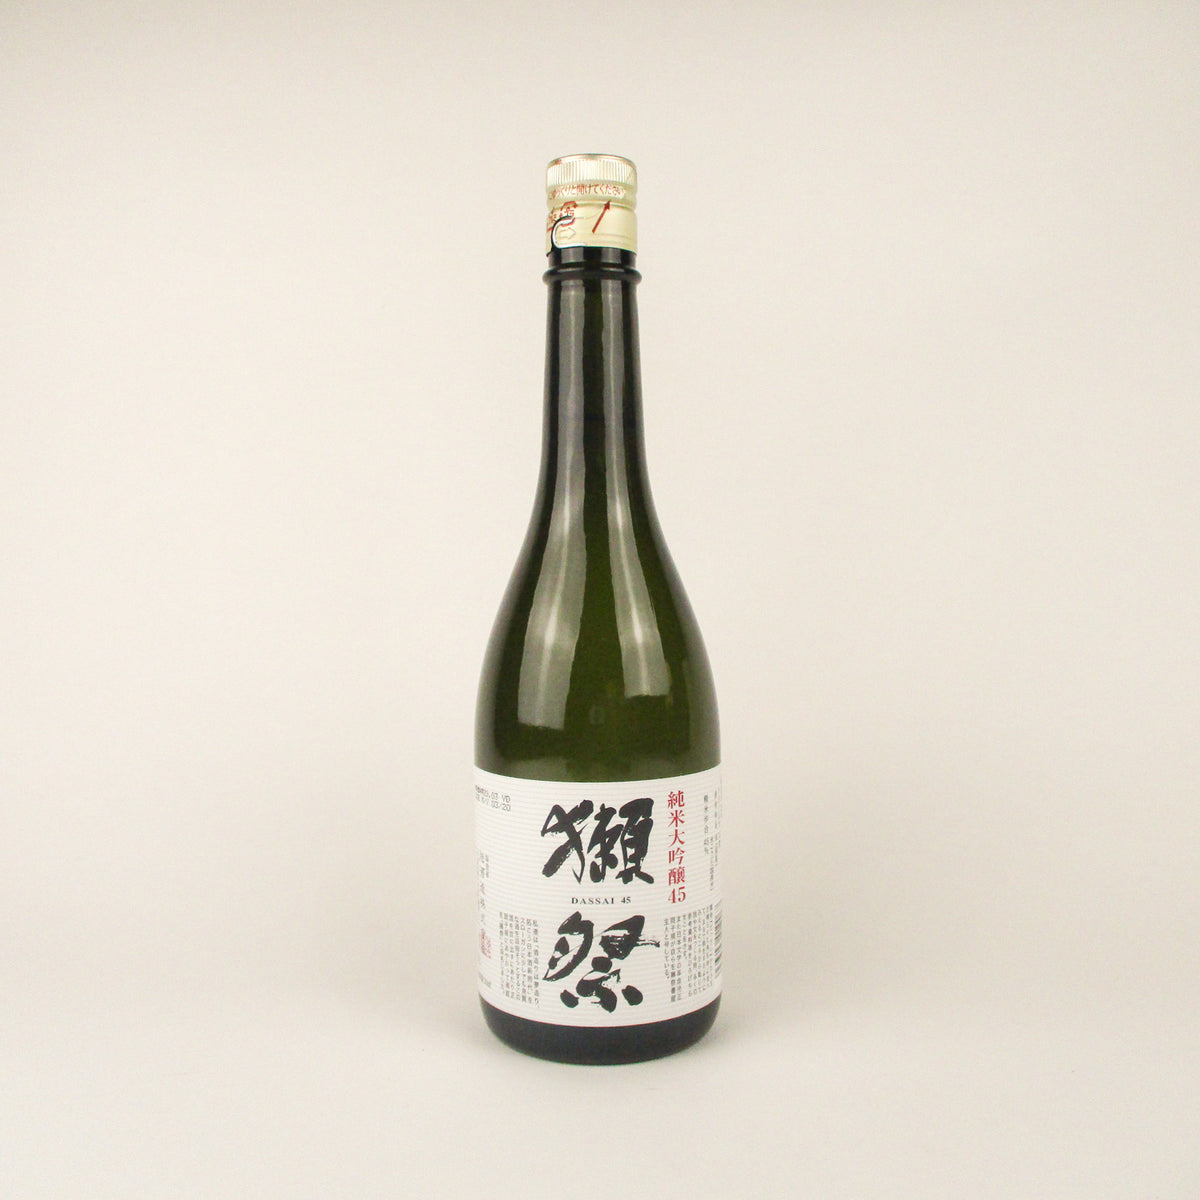 Dassai 45 Junmai Daiginjo Sake - 720ml Sake bottle